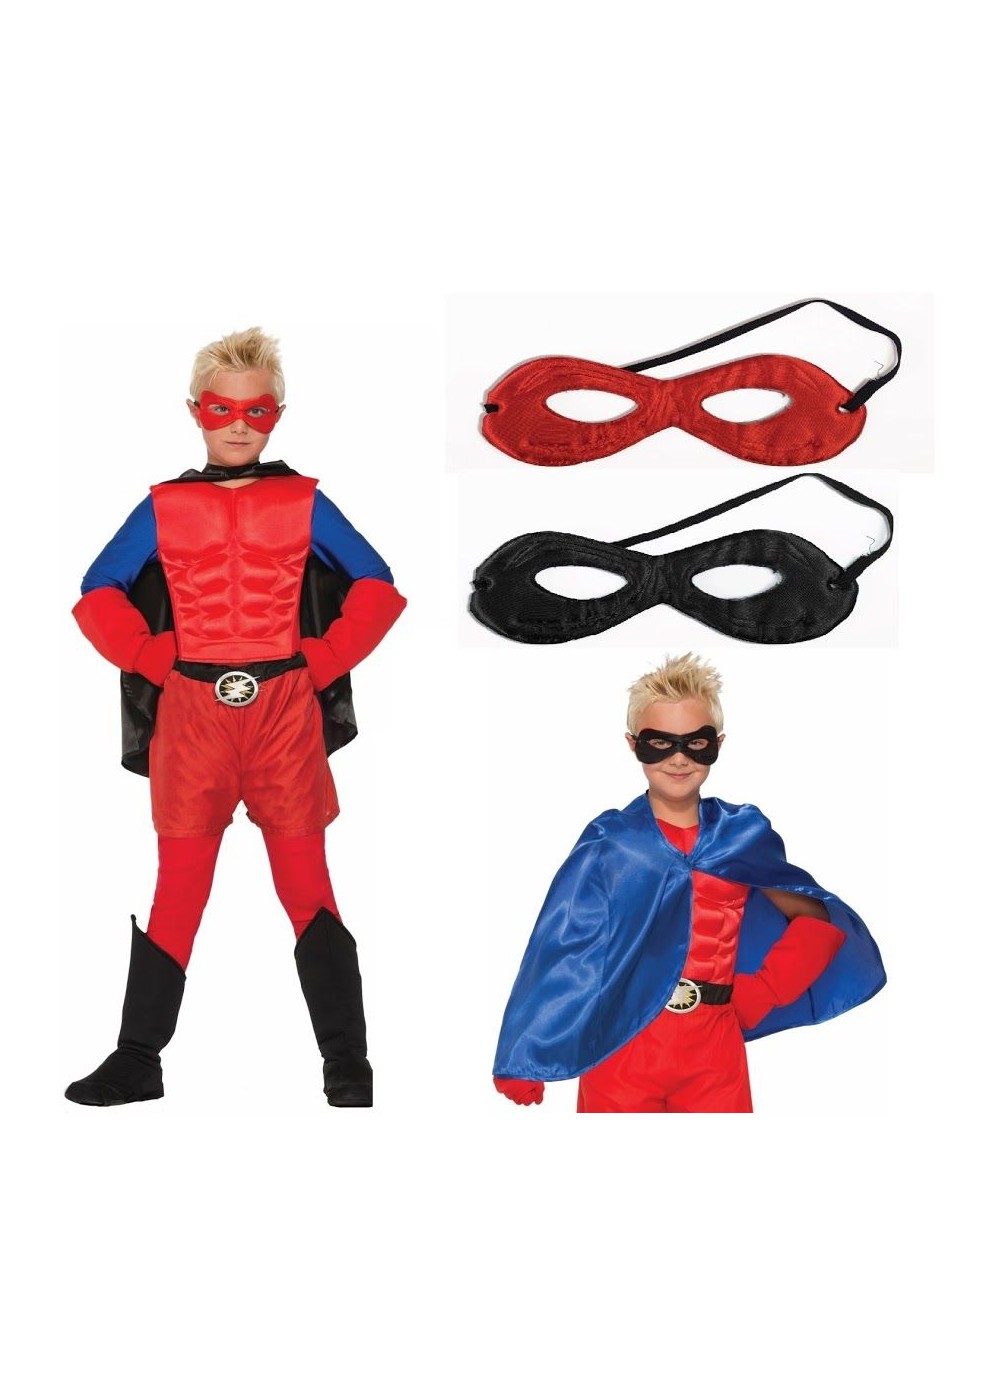 Red and Blue Superhero Boys Costume Set - Superhero Costumes